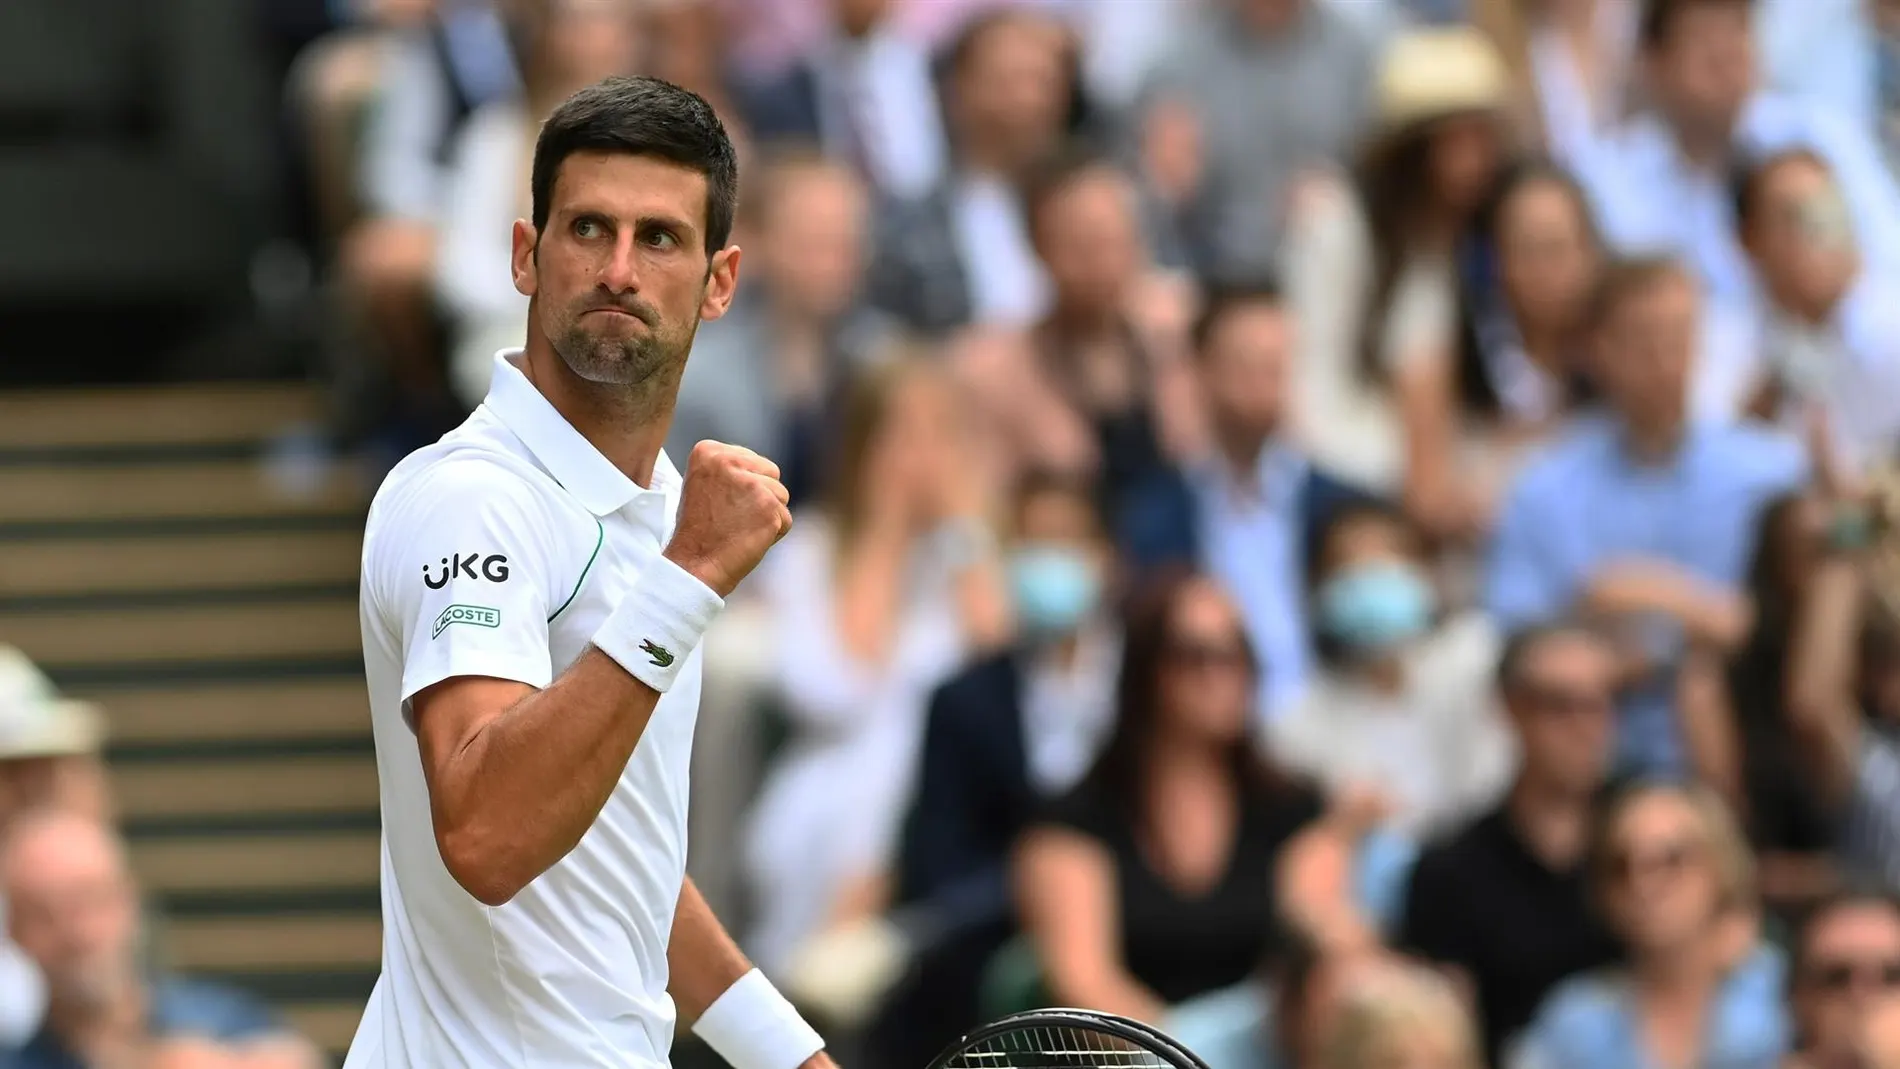 Novak Djokovic derrota a Berrettini en la final de Wimbledon y gana su 20º Grand Slam